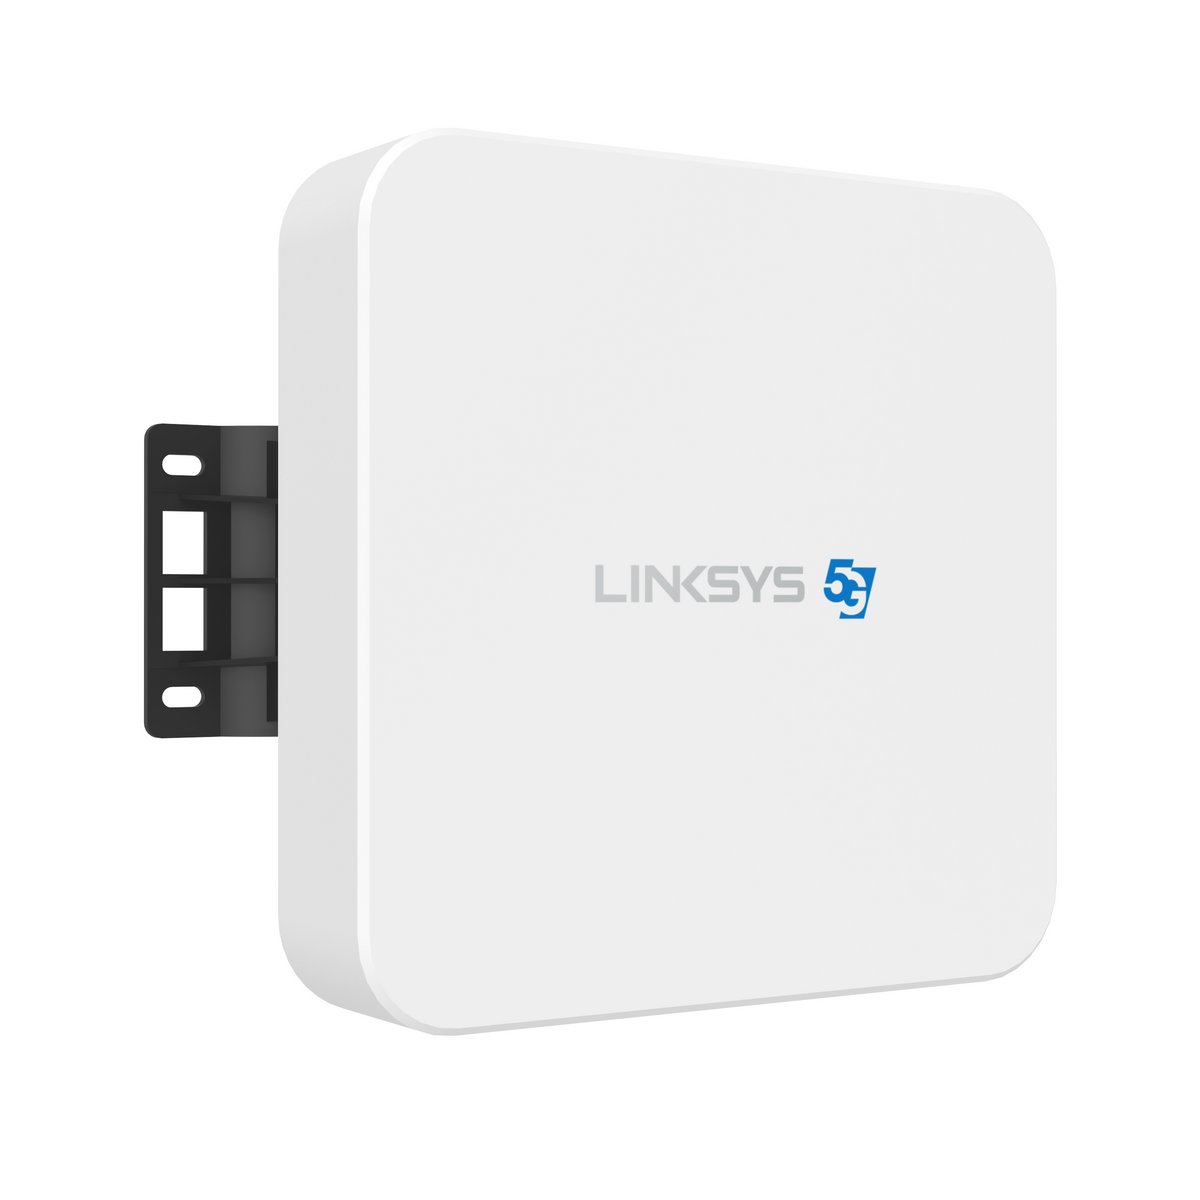 Linksys_5G_Outdoor_Router.0.jpg